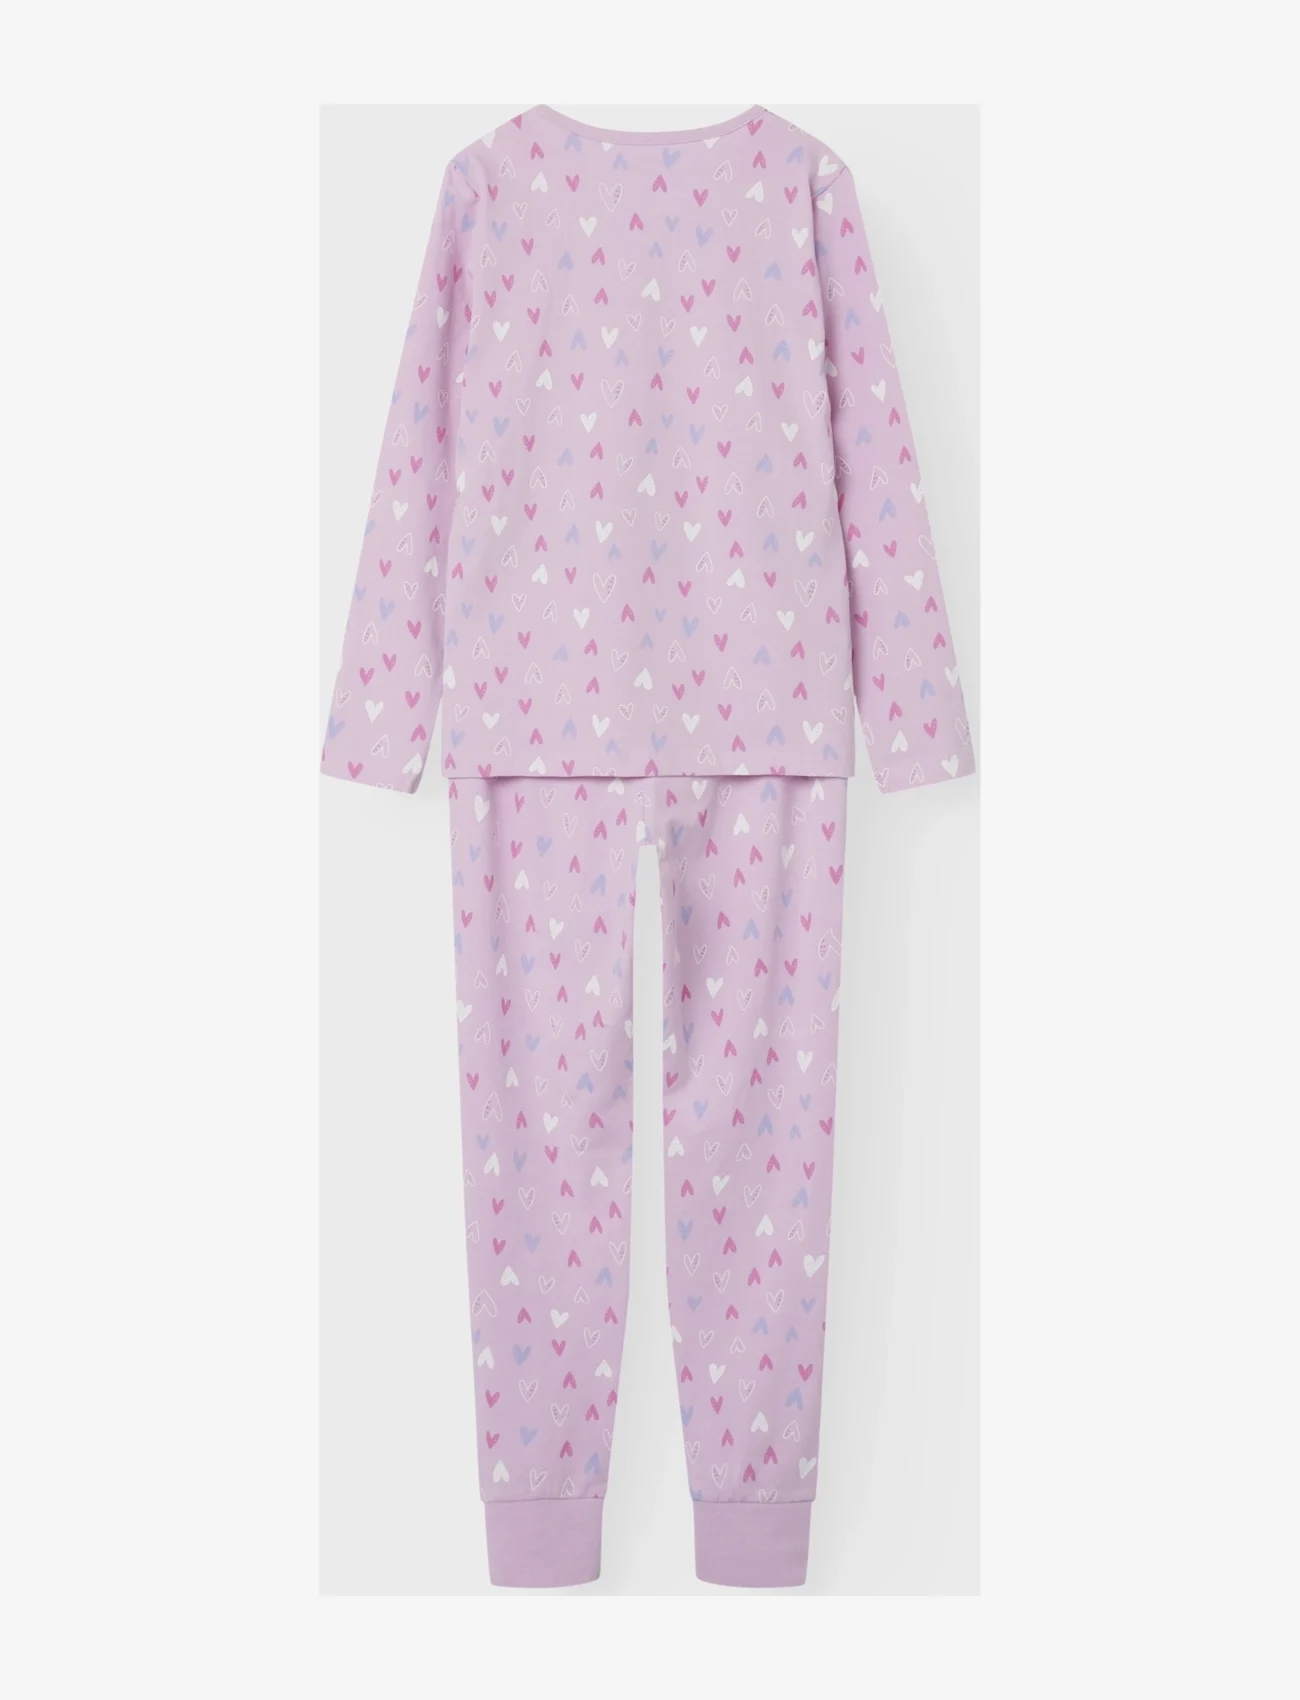 name it - NKFNIGHTSET PINK HEARTS NOOS - pyjamassæt - pink lavender - 1